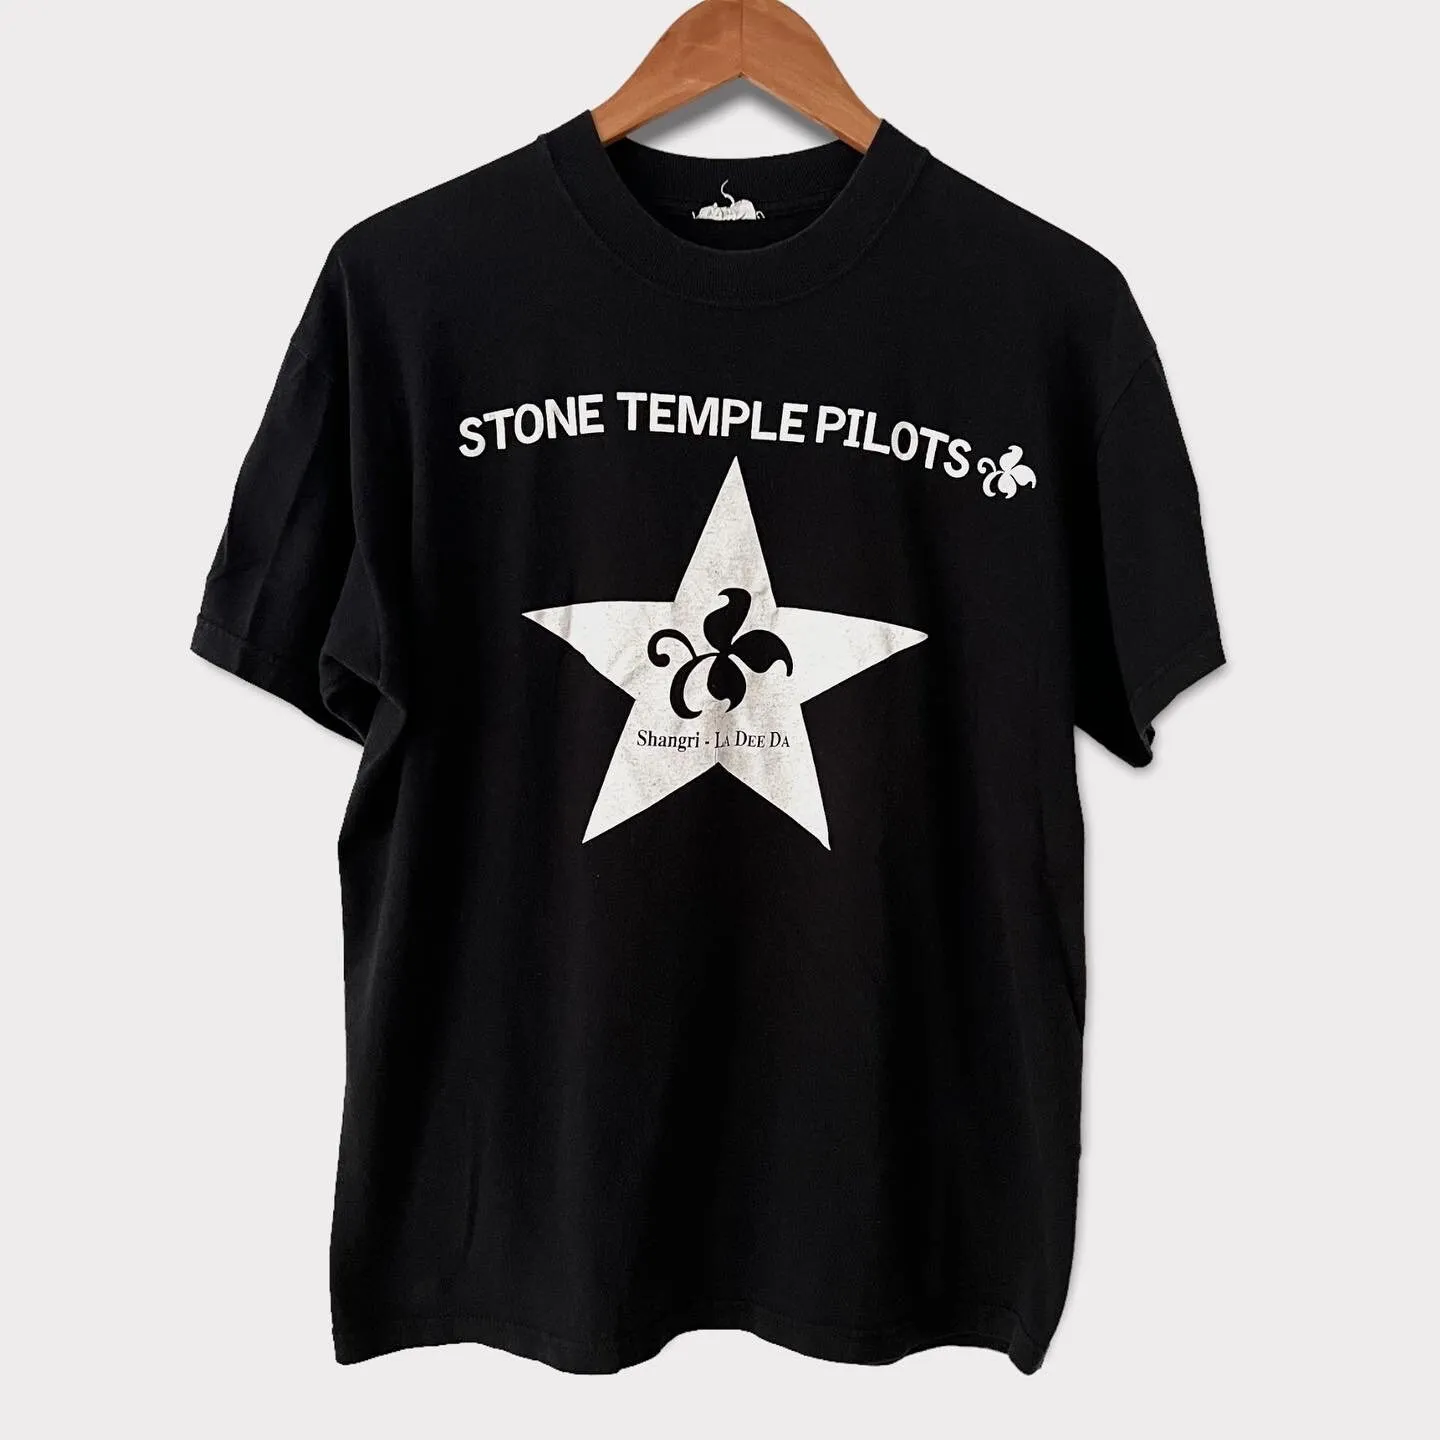 2001 Stone Temple Pilots Shangri-La Dee Da Euro Tour Винтажная рок-футболка 00S 2000S